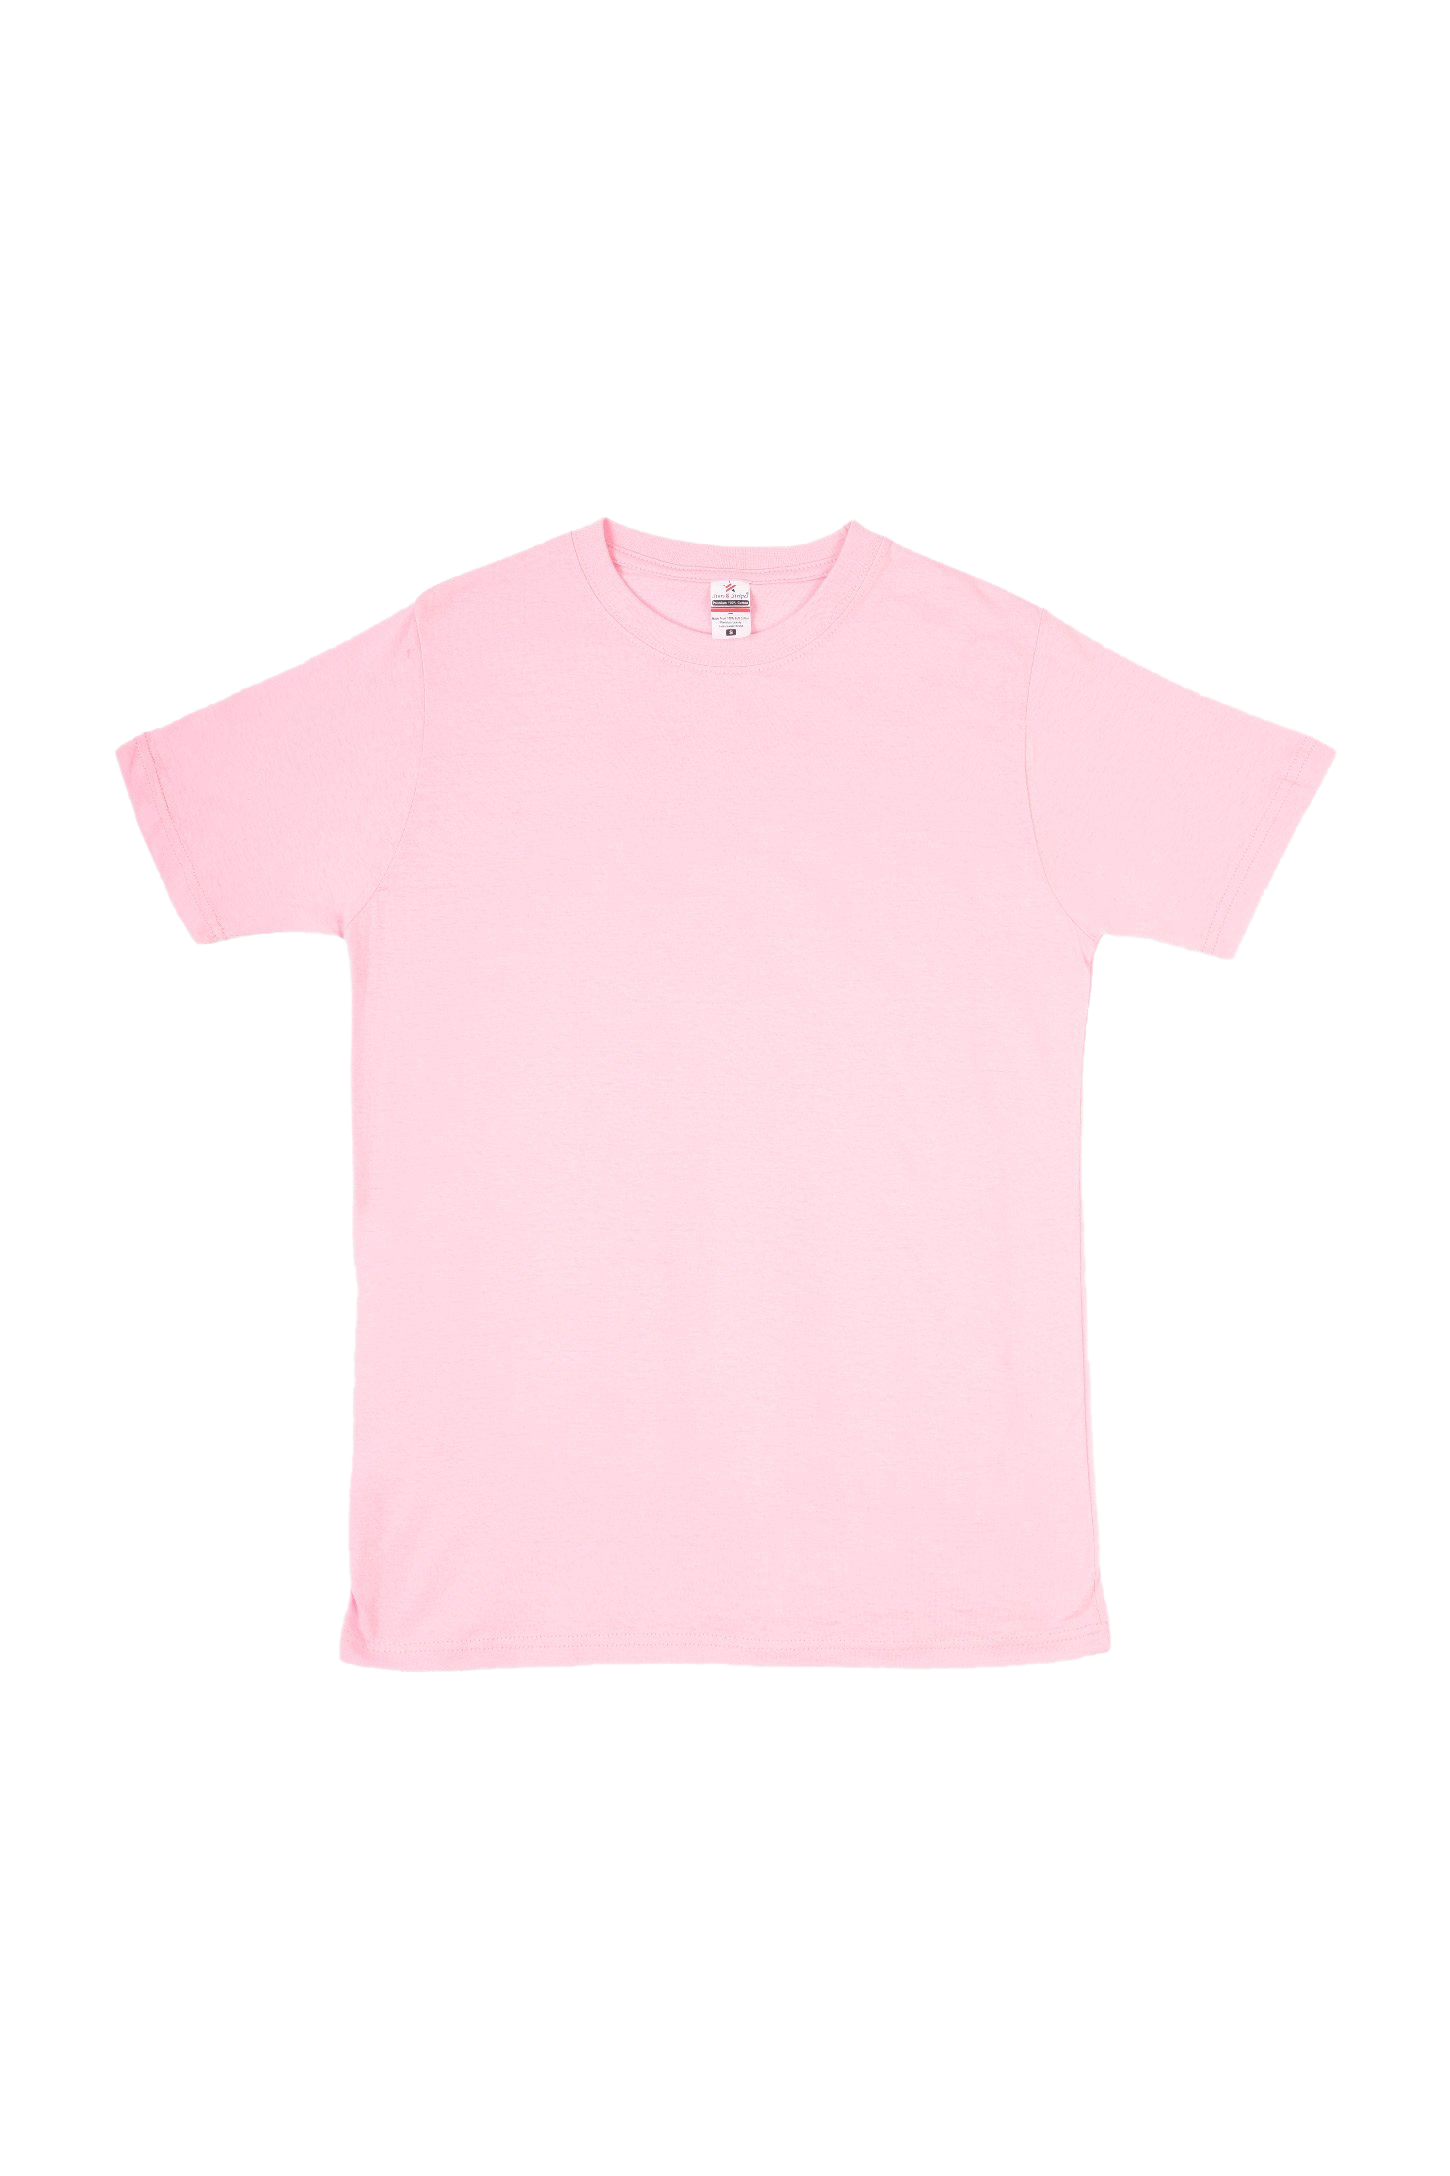 T-shirt cor-de-rosa simples imagem de alta qualidade PNG